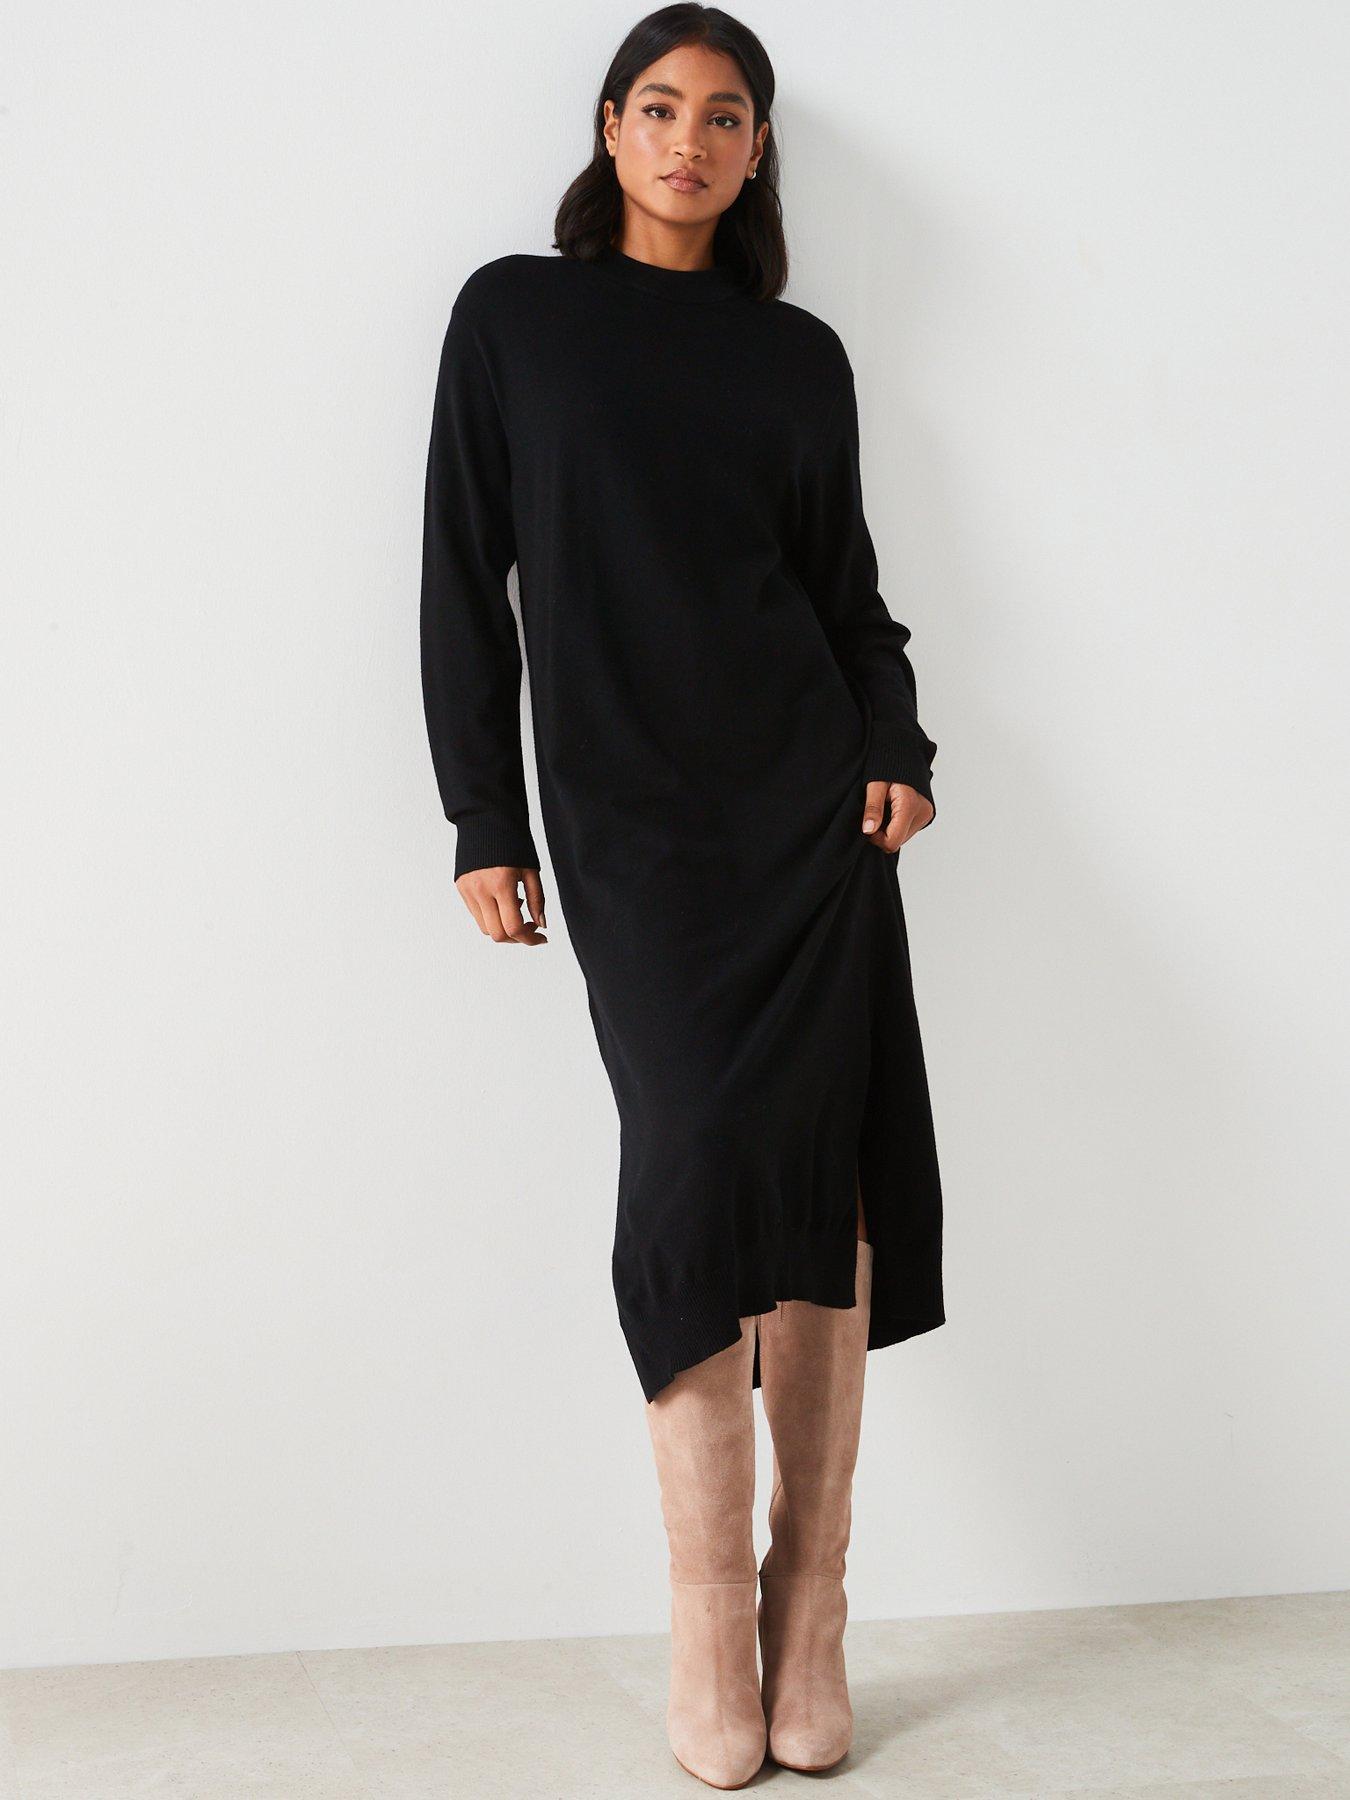 Buy MANGO Women Black Solid Fit &Flare Dress - Dresses for Women 2504821 |  Myntra